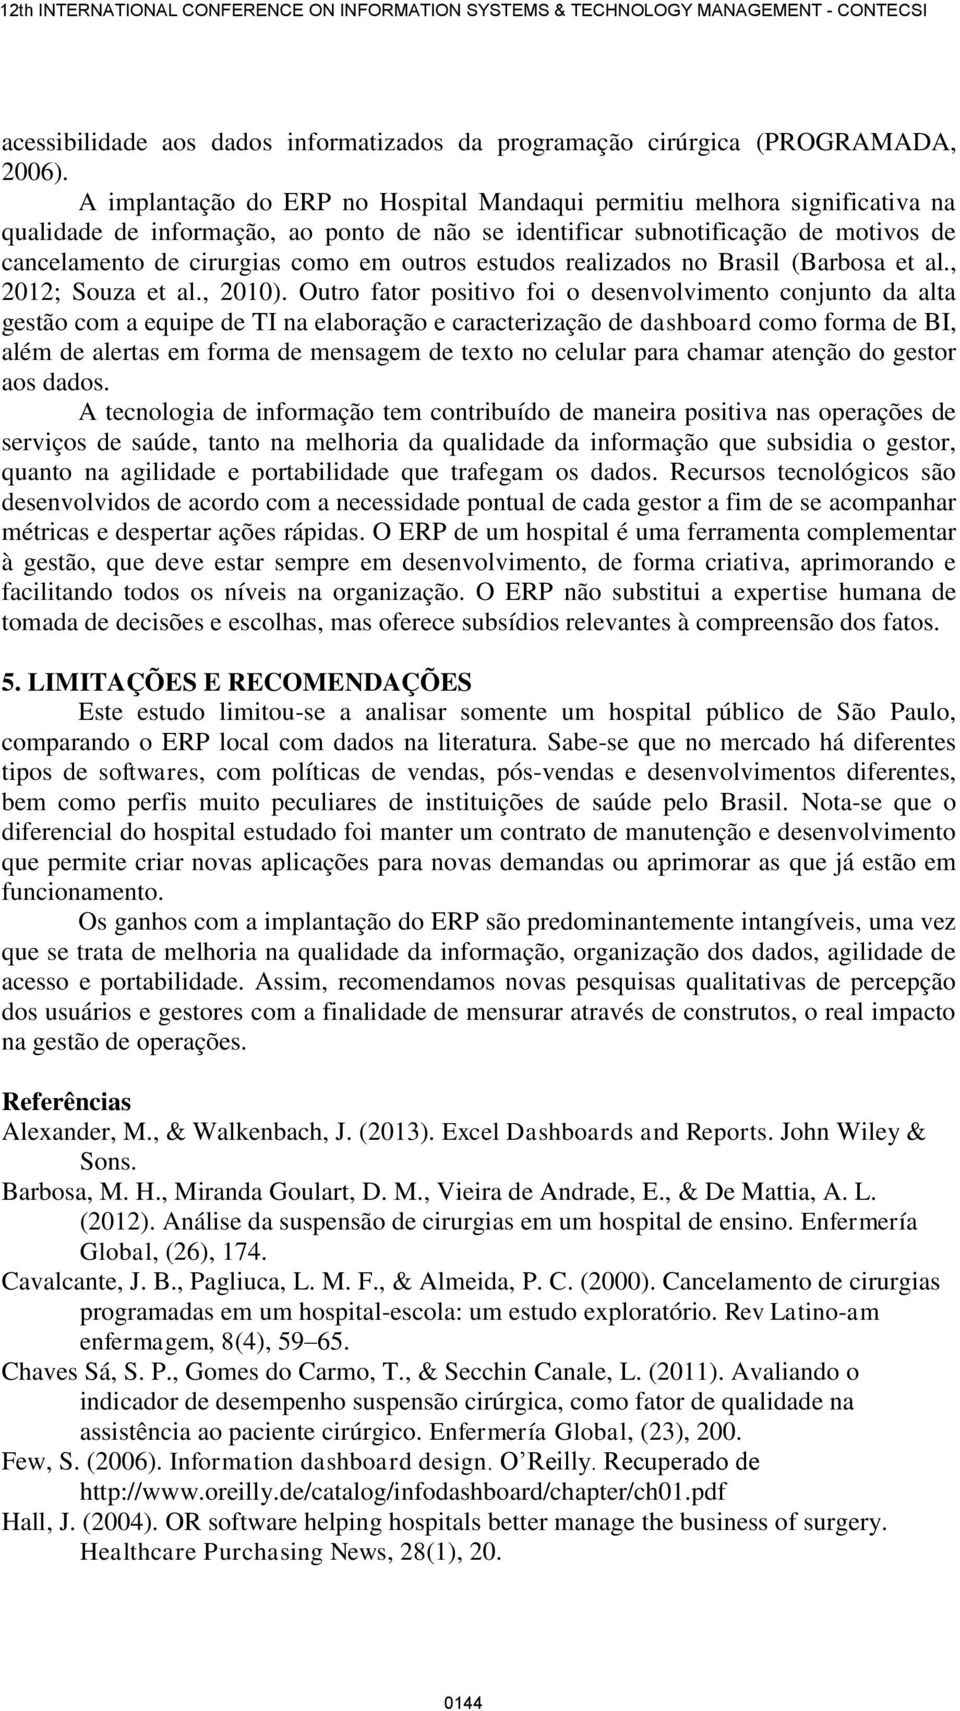 outros estudos realizados no Brasil (Barbosa et al., 2012; Souza et al., 2010).